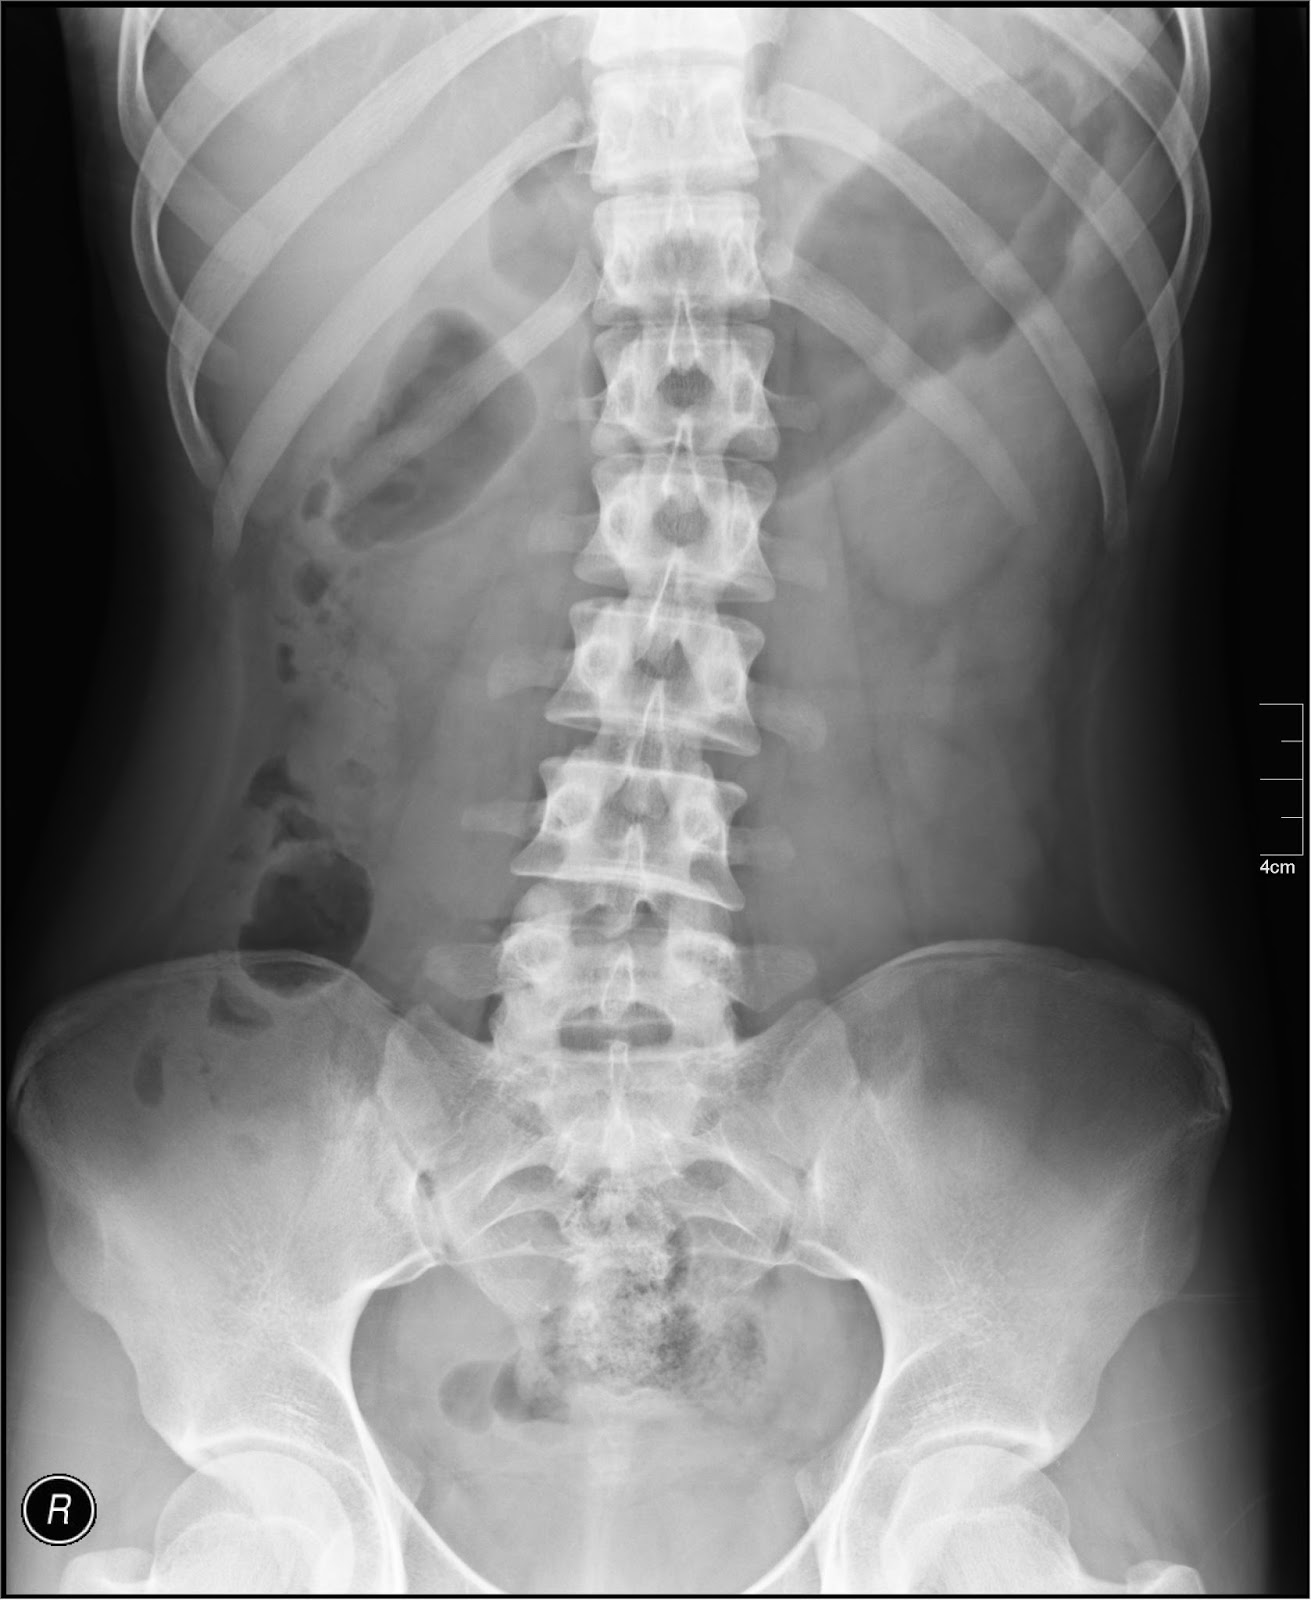 Abdominal X-Rays: What's the Point? - EMOttawa